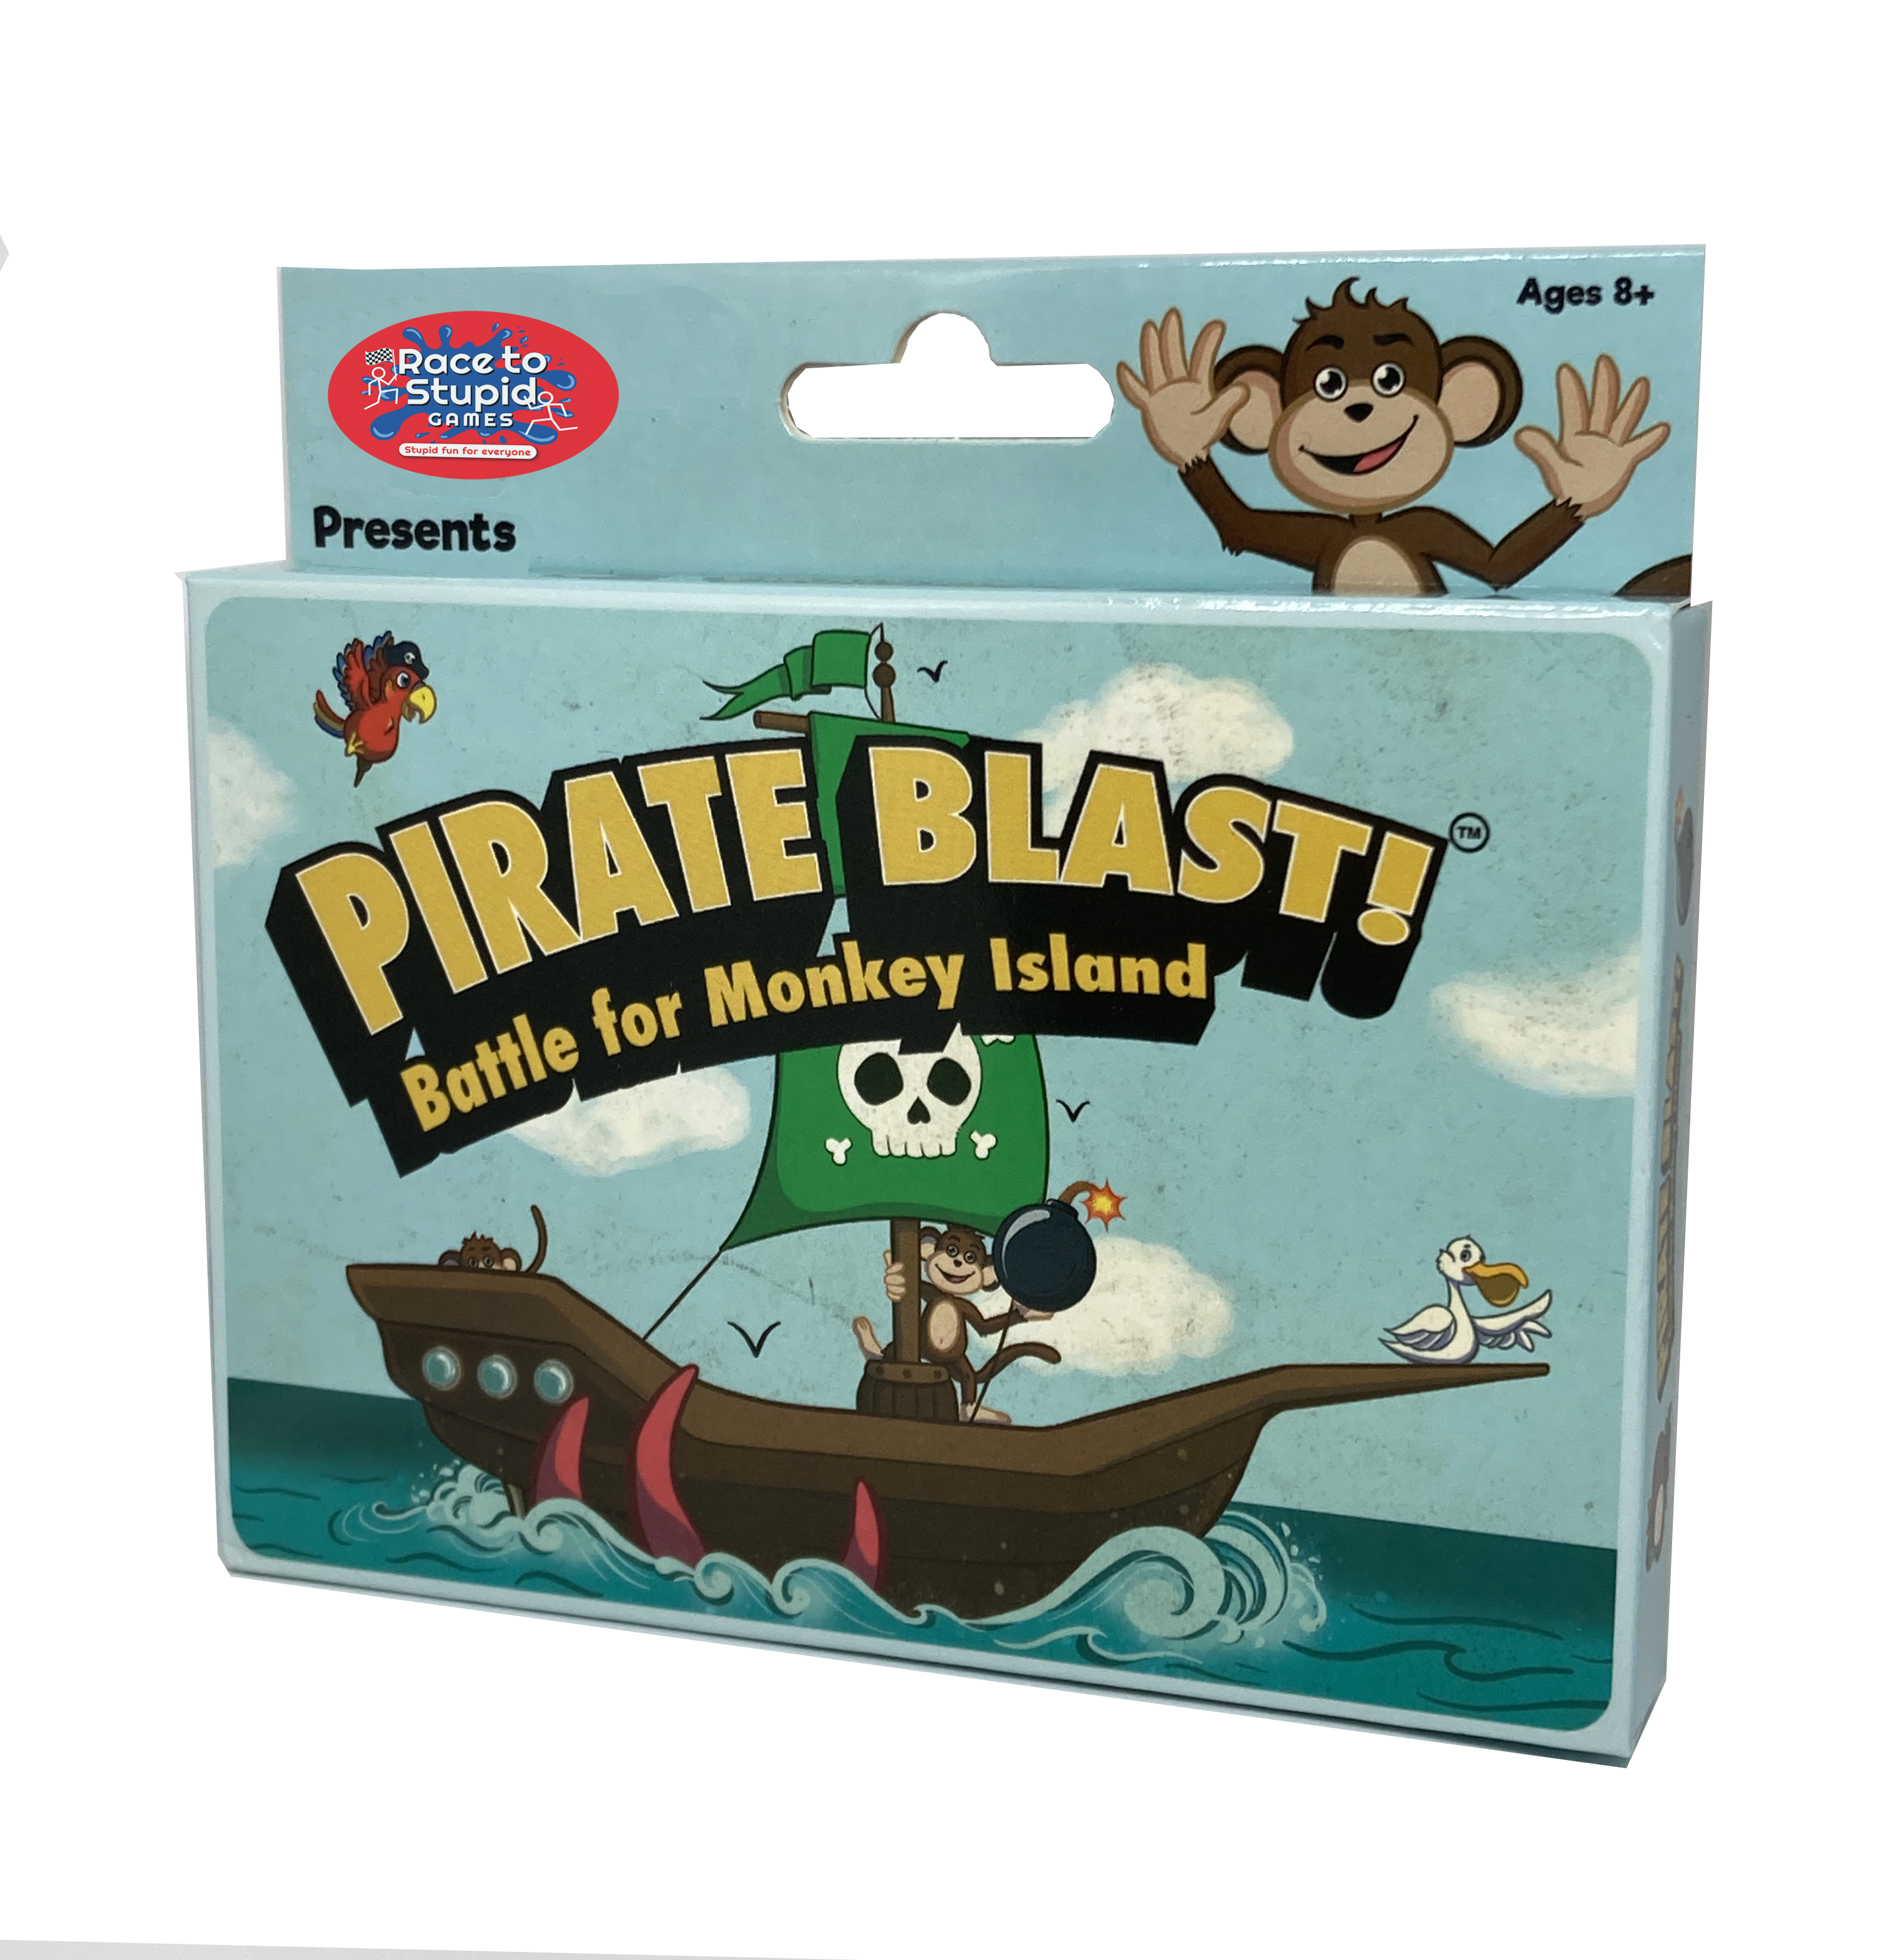 Pirate Blast: Battle for Monkey Island